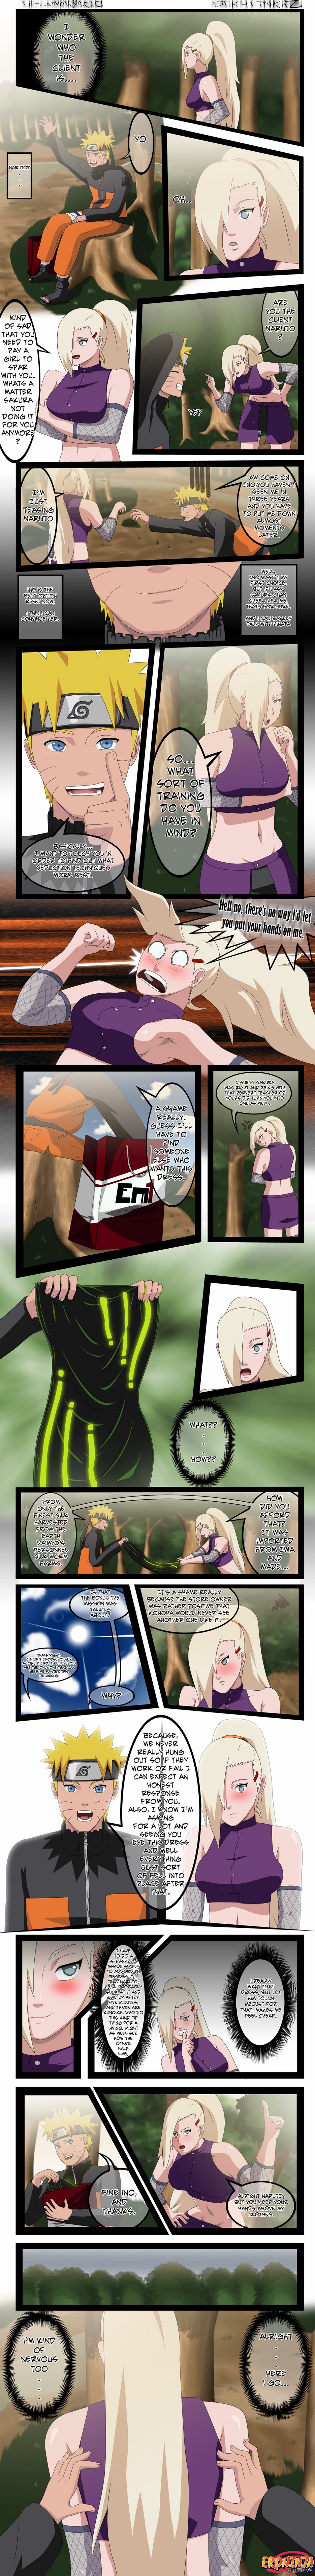 Eroninja Ongoing Naruto Porn Comic By Stikyfinkaz 003 Naruto